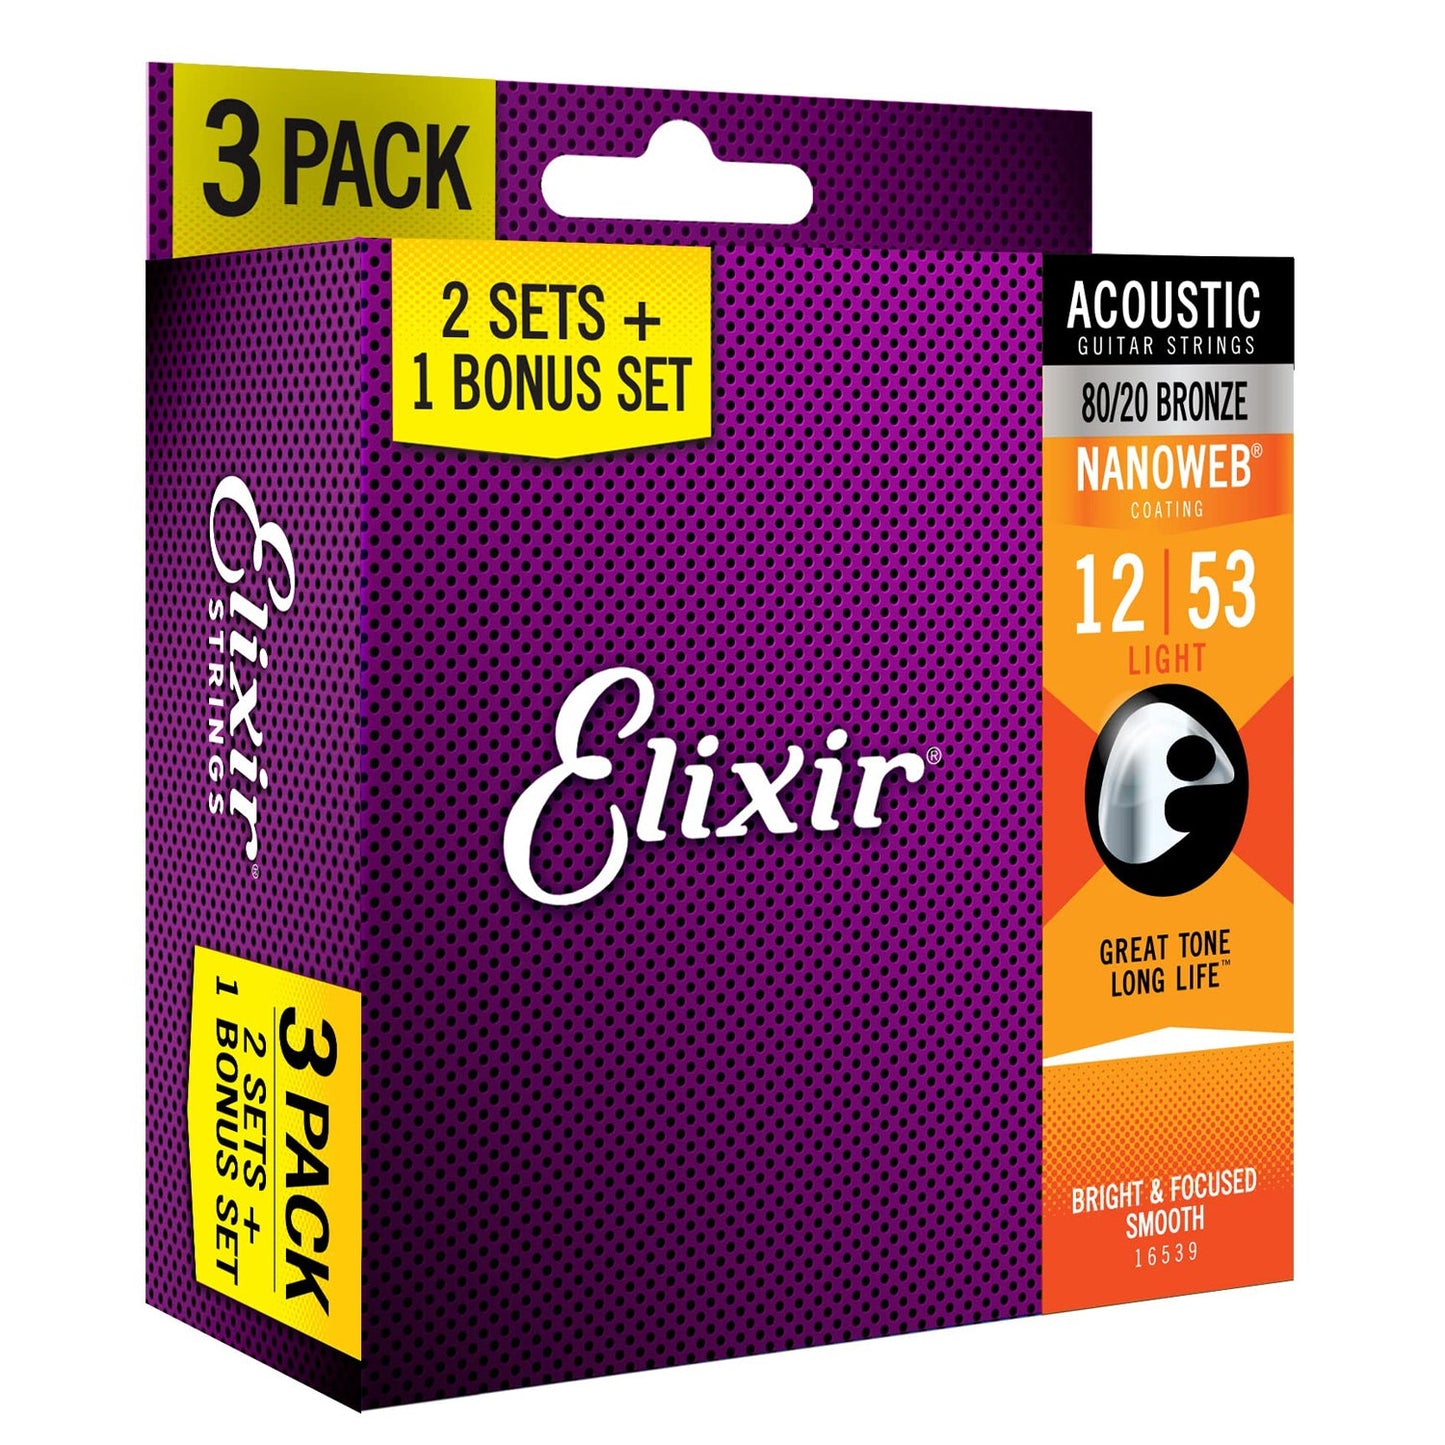 Elixir Acoustic 80/20 Bronze Acoustic Guitar Strings with Nanoweb Coating - Light (12 16 24 32 42 53) 3-Pack